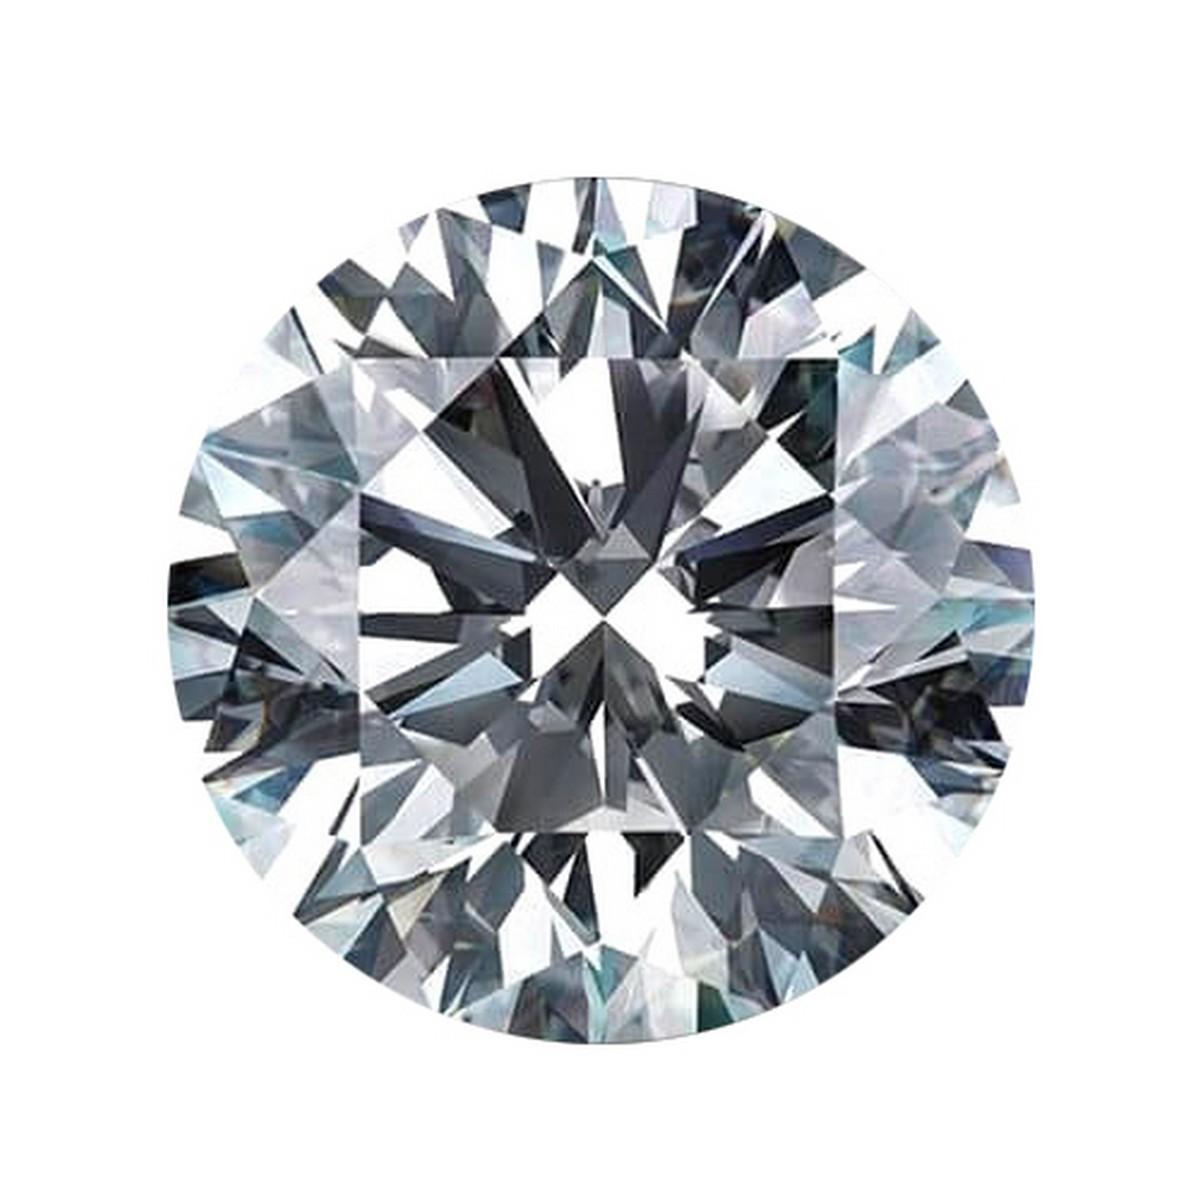 2.7 ctw. VVS2 IGI Certified Round Cut Loose Diamond (LAB GROWN)